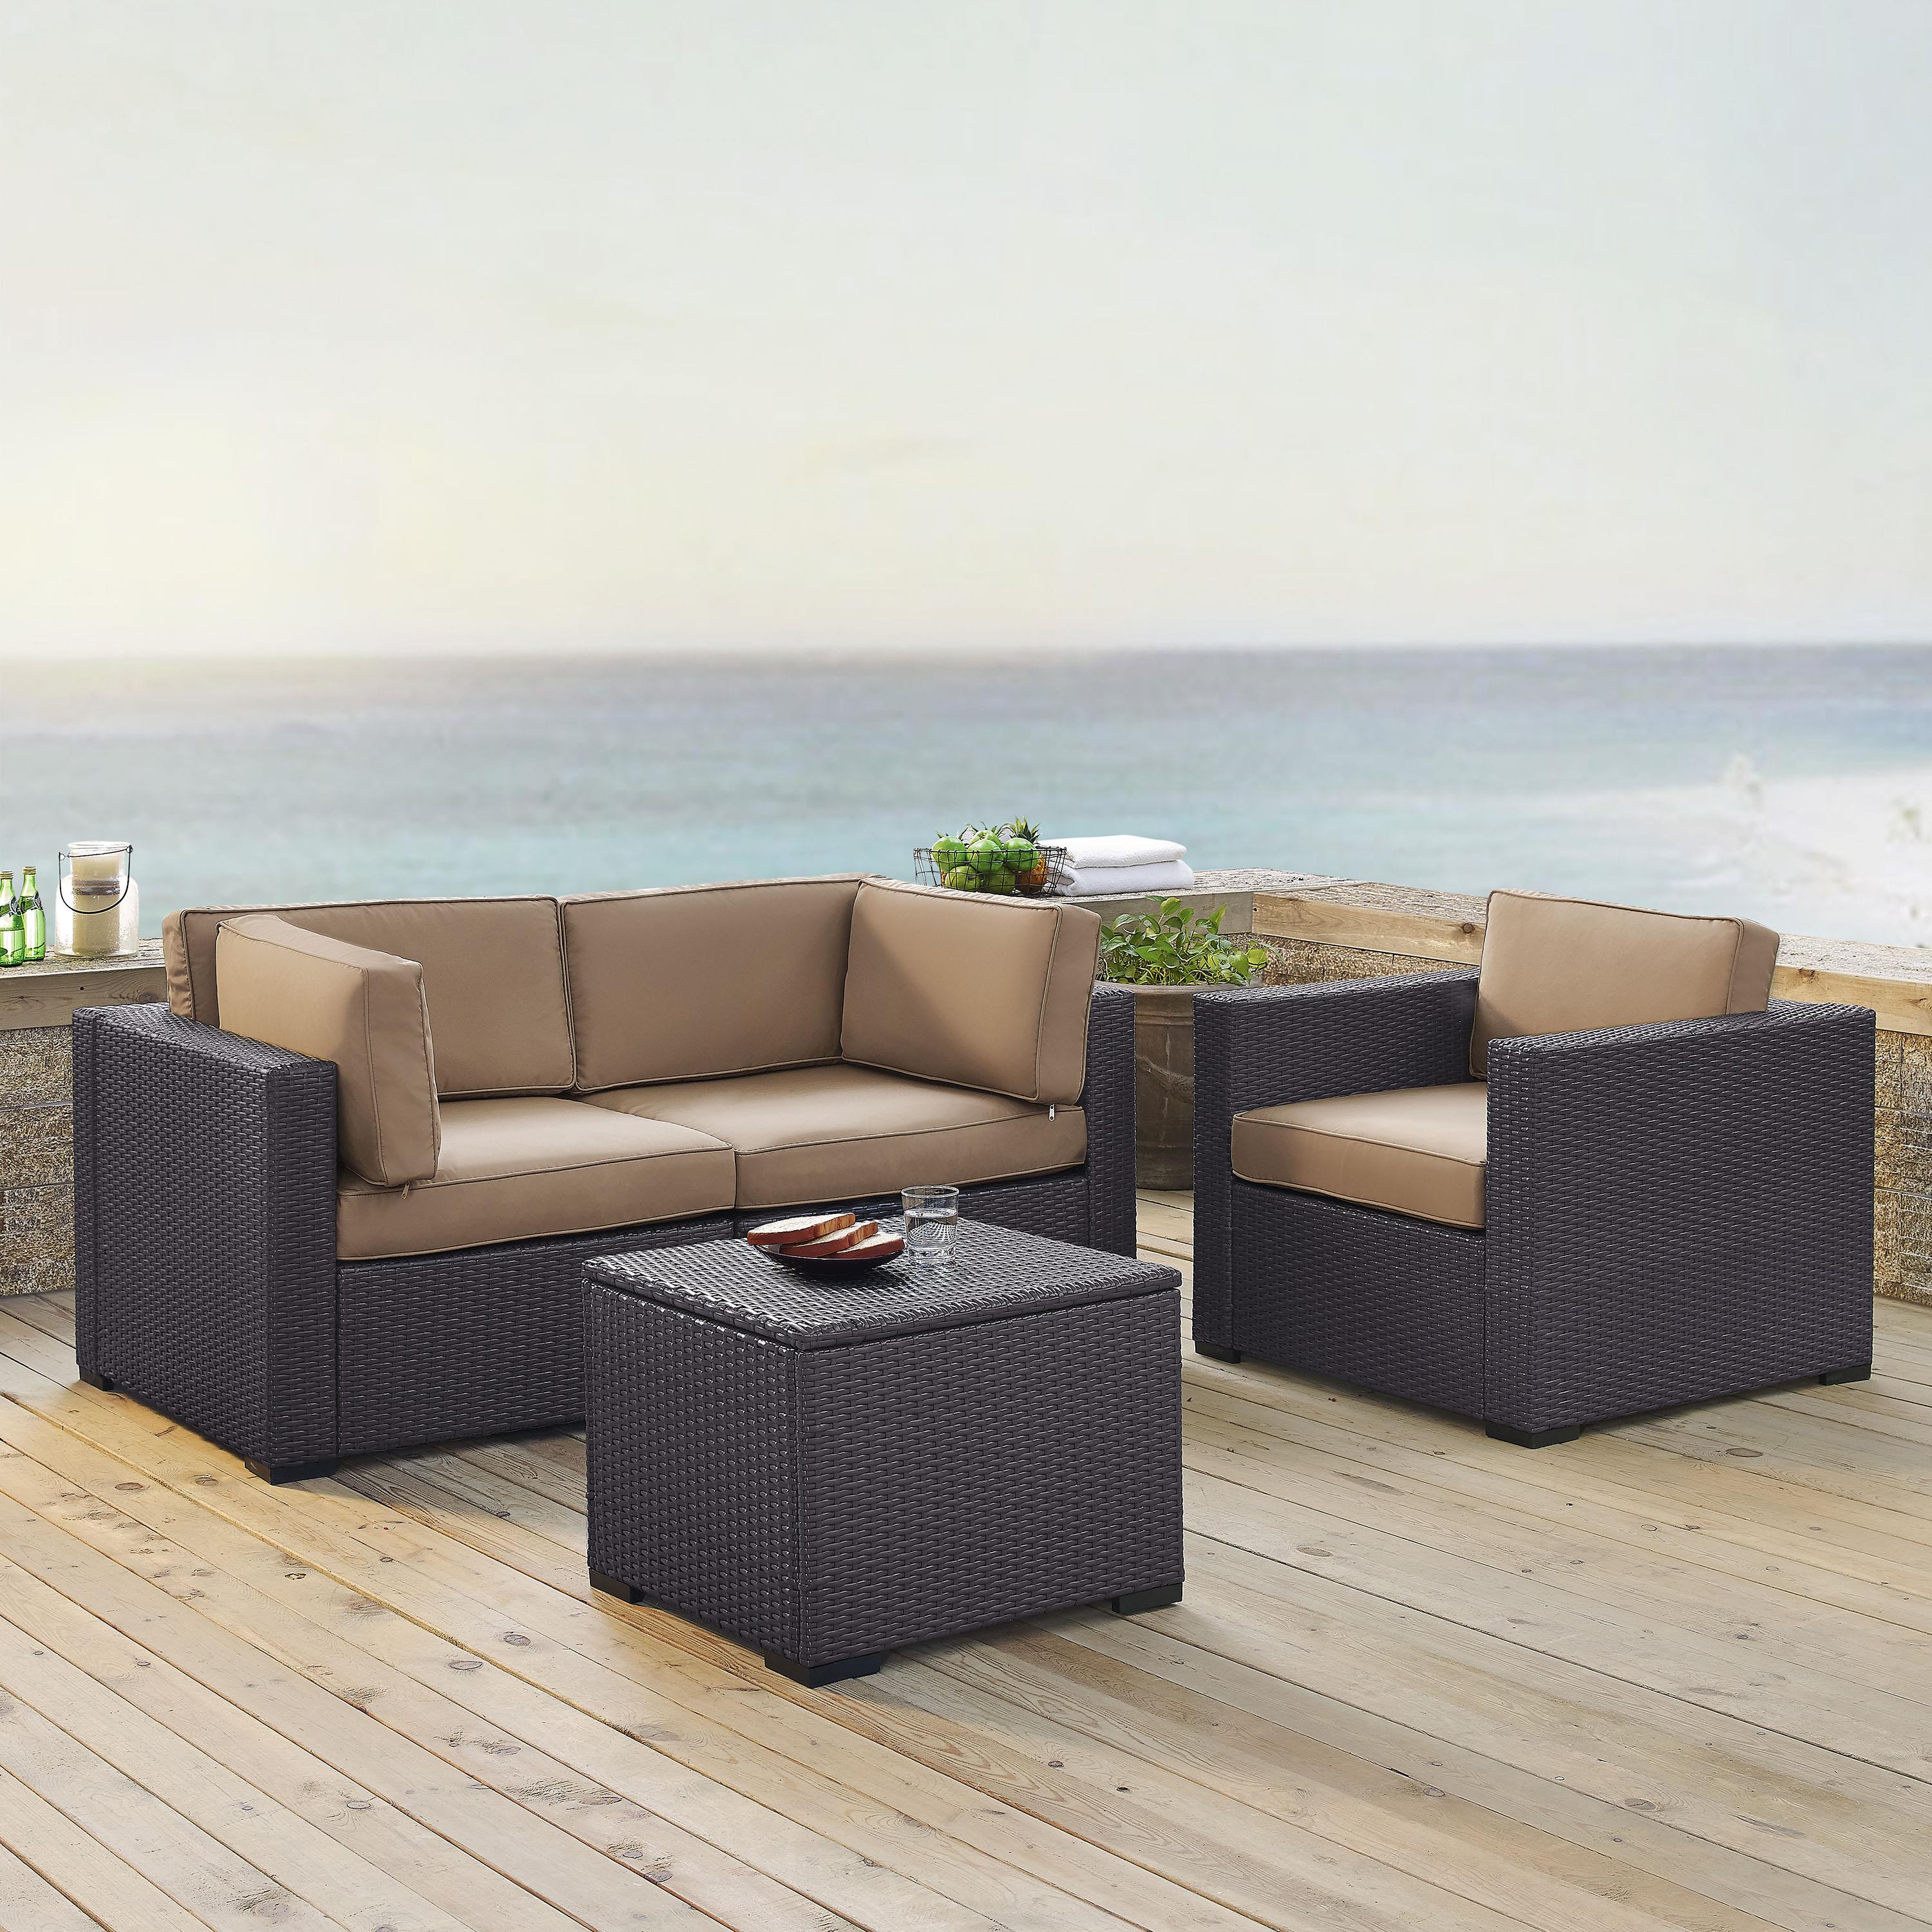 Crosley Furniture Biscayne 4 Piece Metal Patio Sofa Set in Brown/Mocha - image 3 of 4